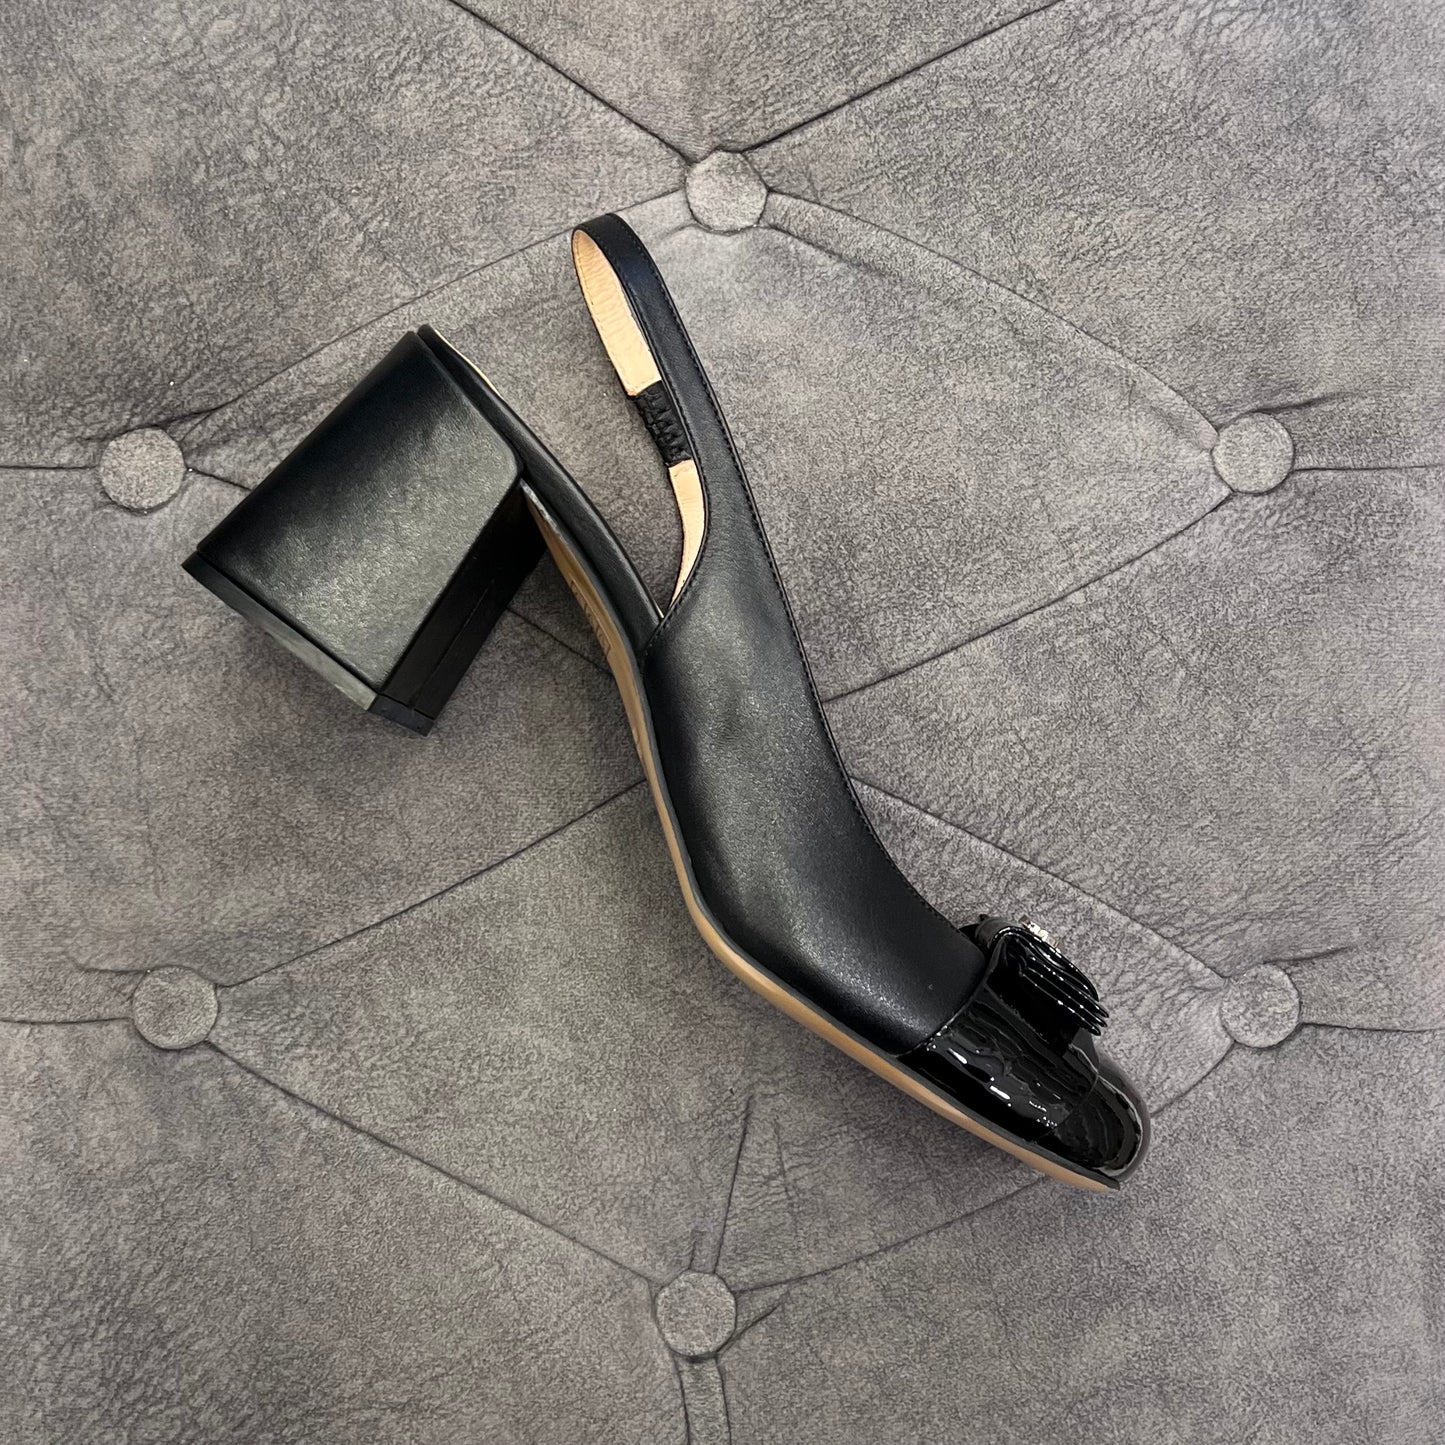 Sofia Baldi Turkish High heel Sandal for Women in black